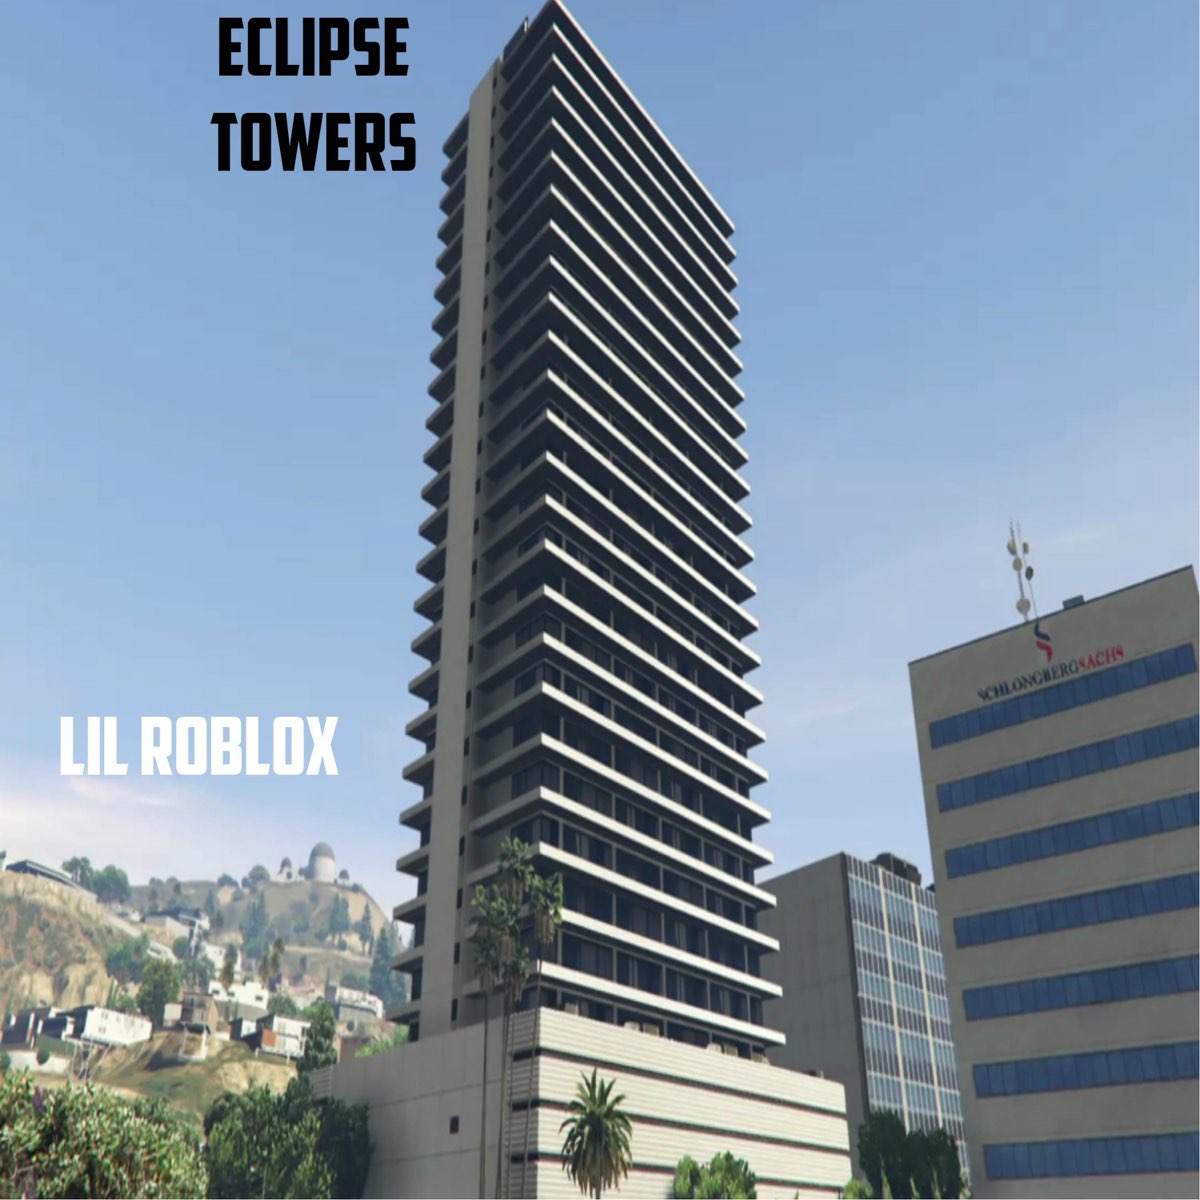 Eclipse tower gta 5 фото 71